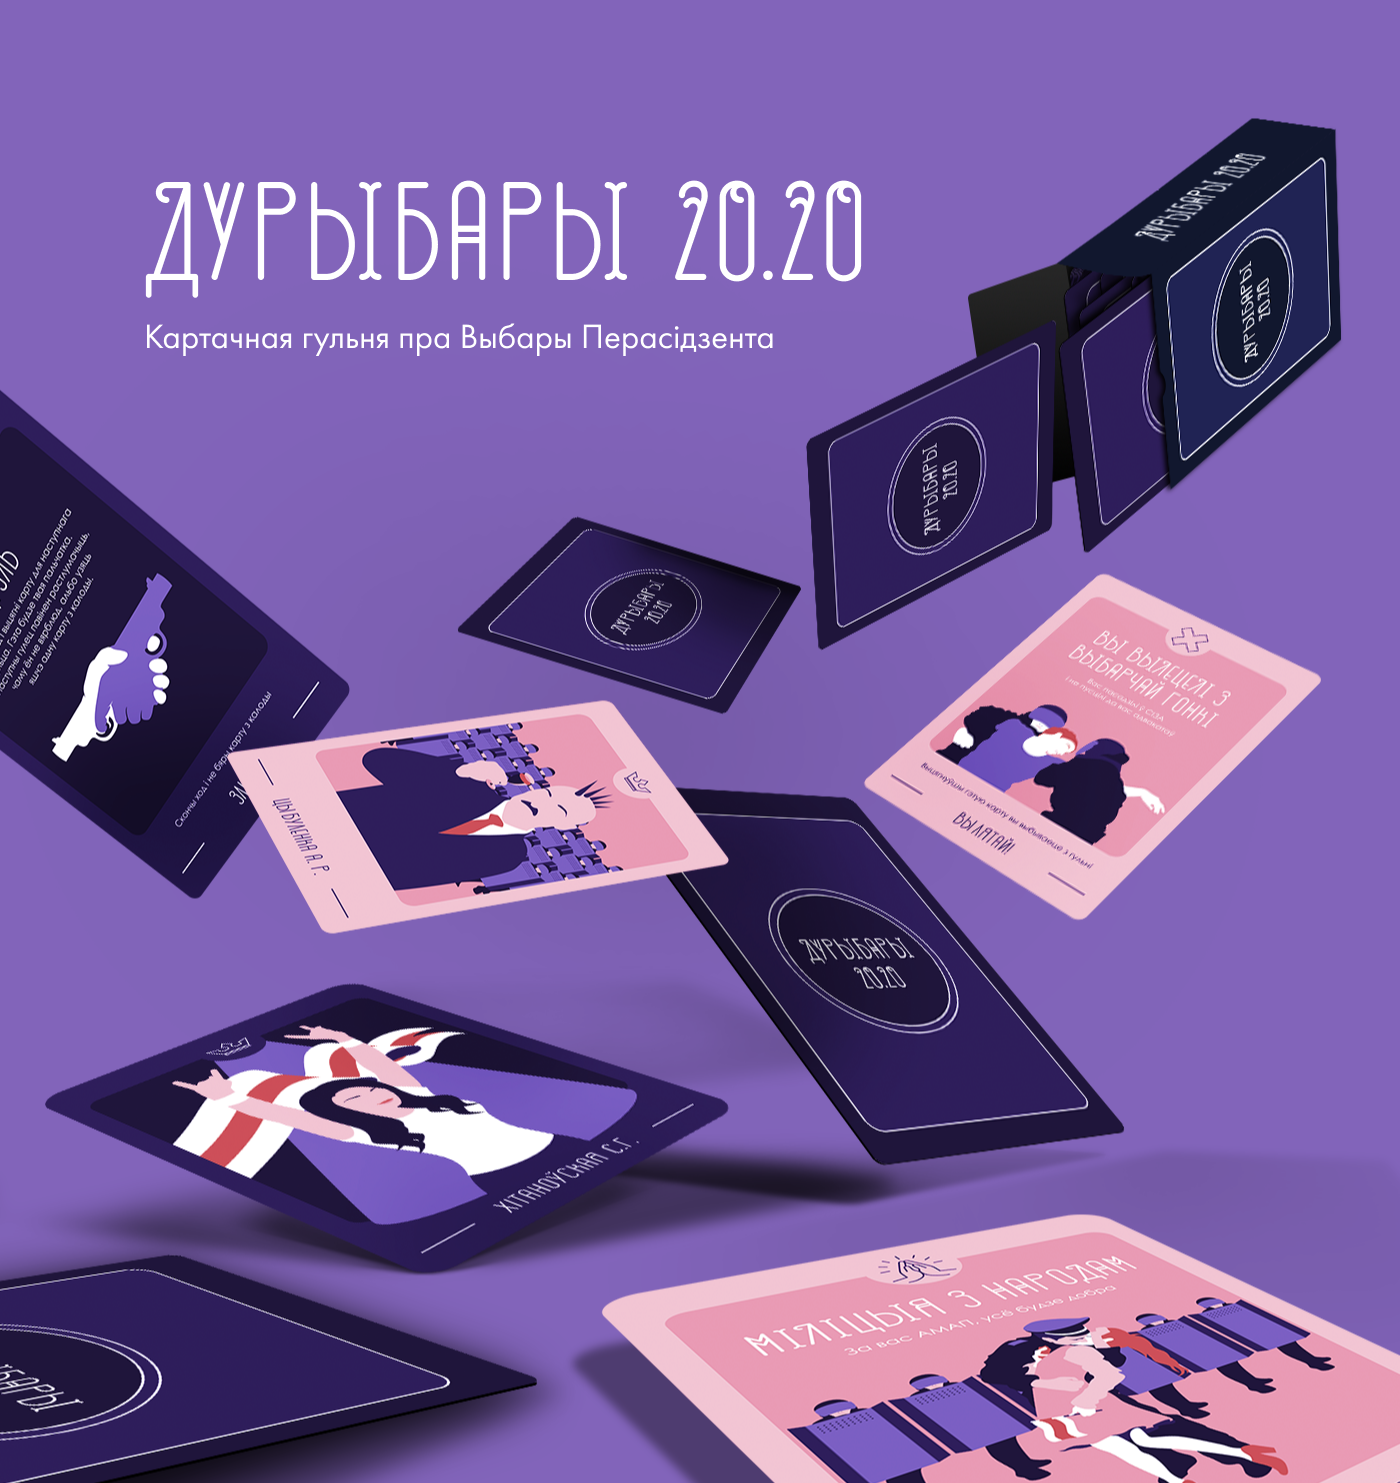 belarus card Elections flat illustration game Illustrator Vector Illustration жыве Беларусь